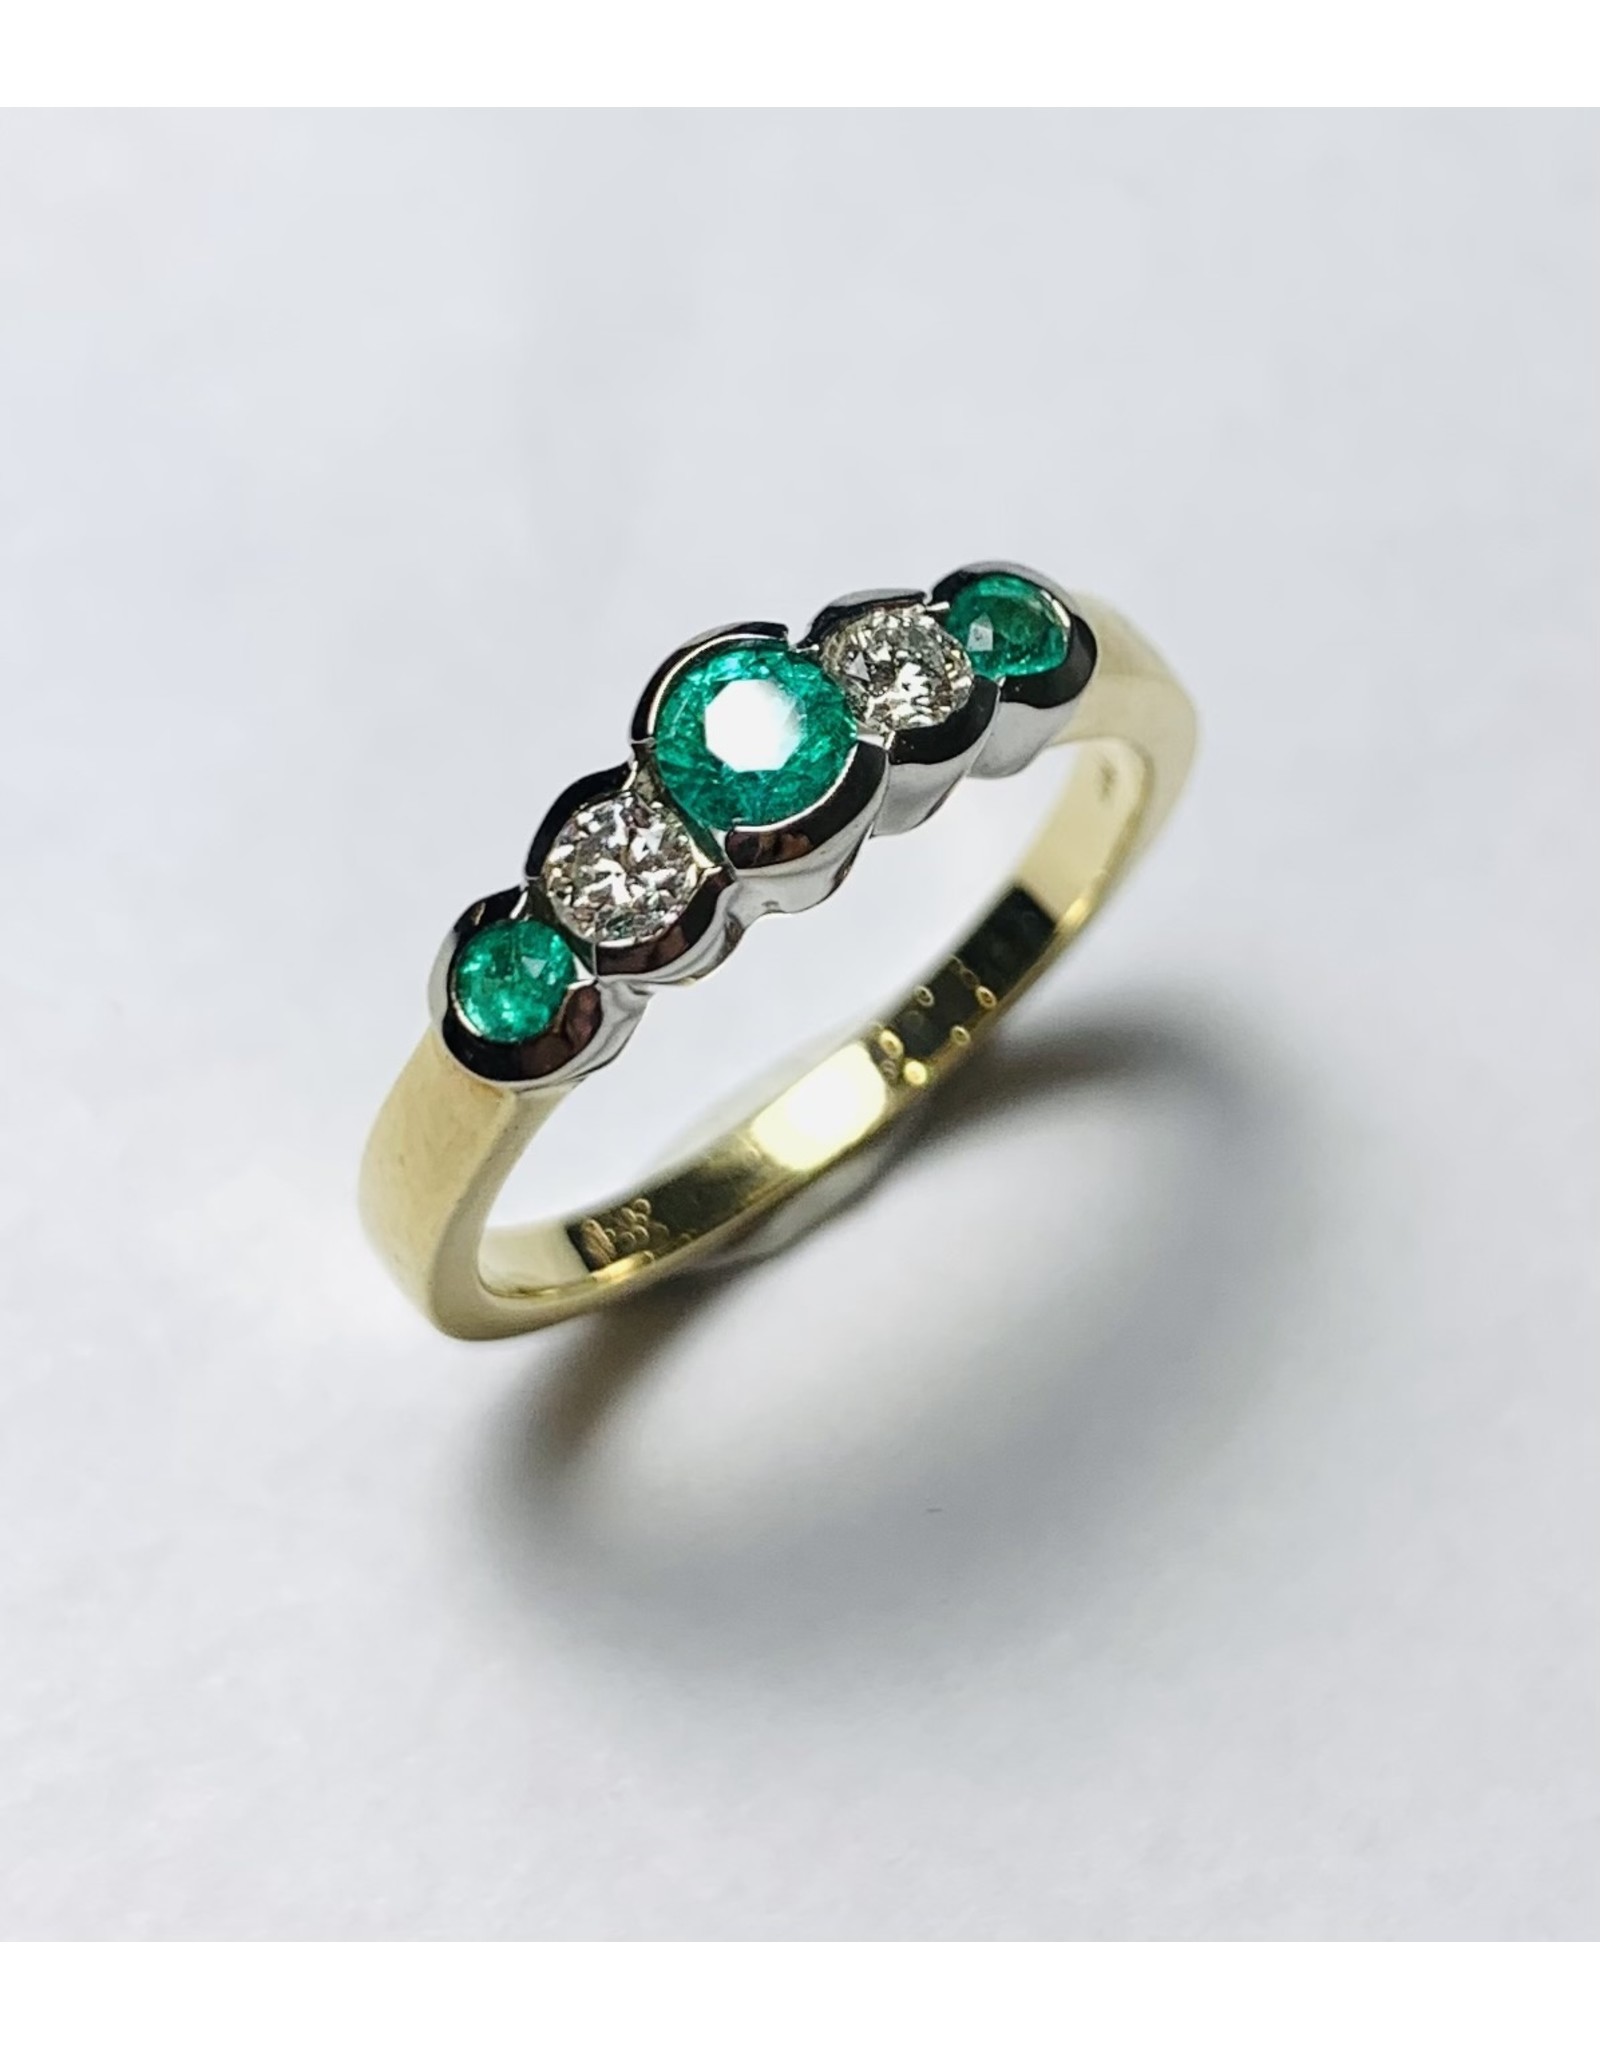 Emerald & Diamond Ring14KY